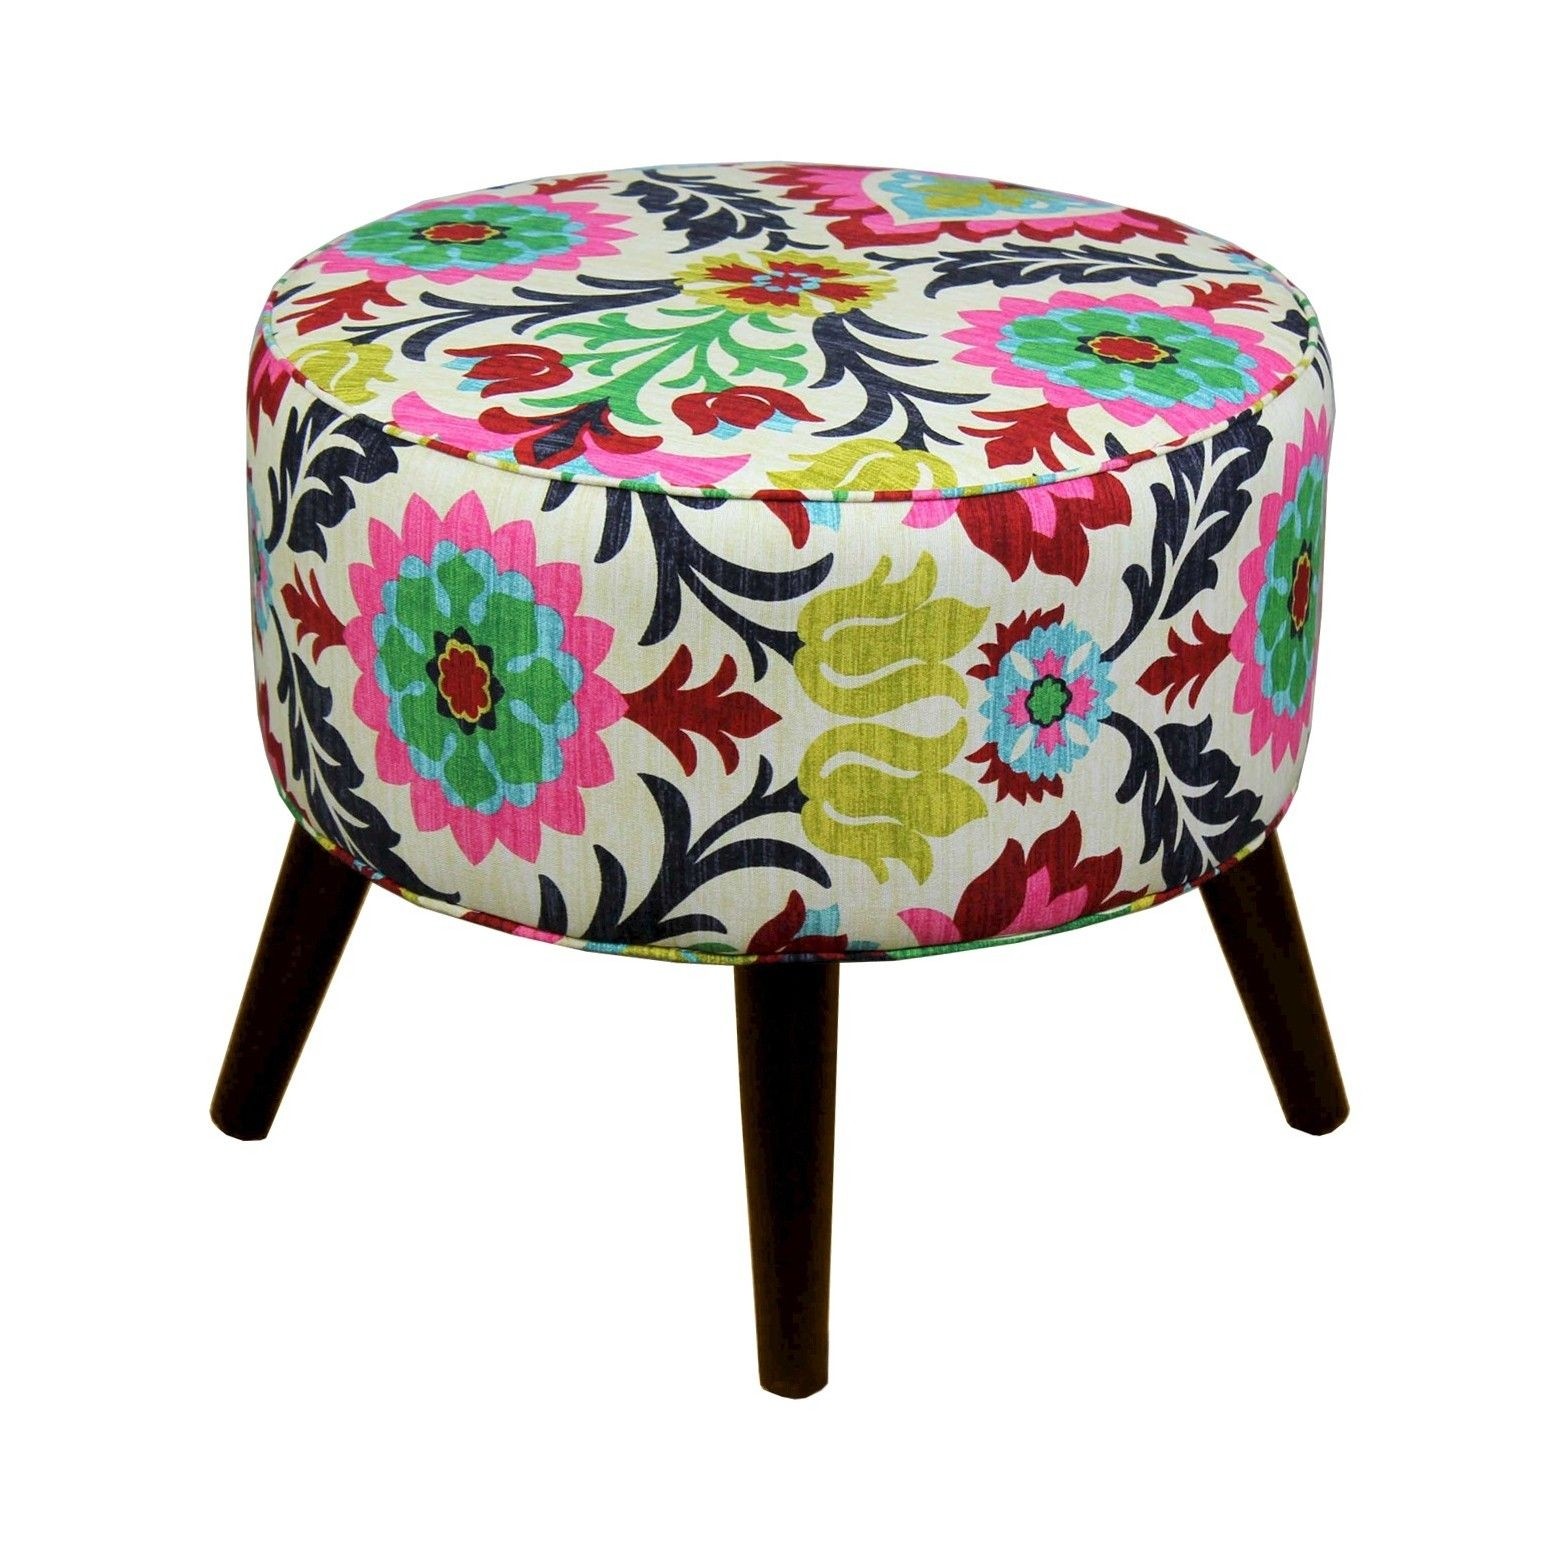 Funky floral or teal ottoman stool ottoman round ottoman